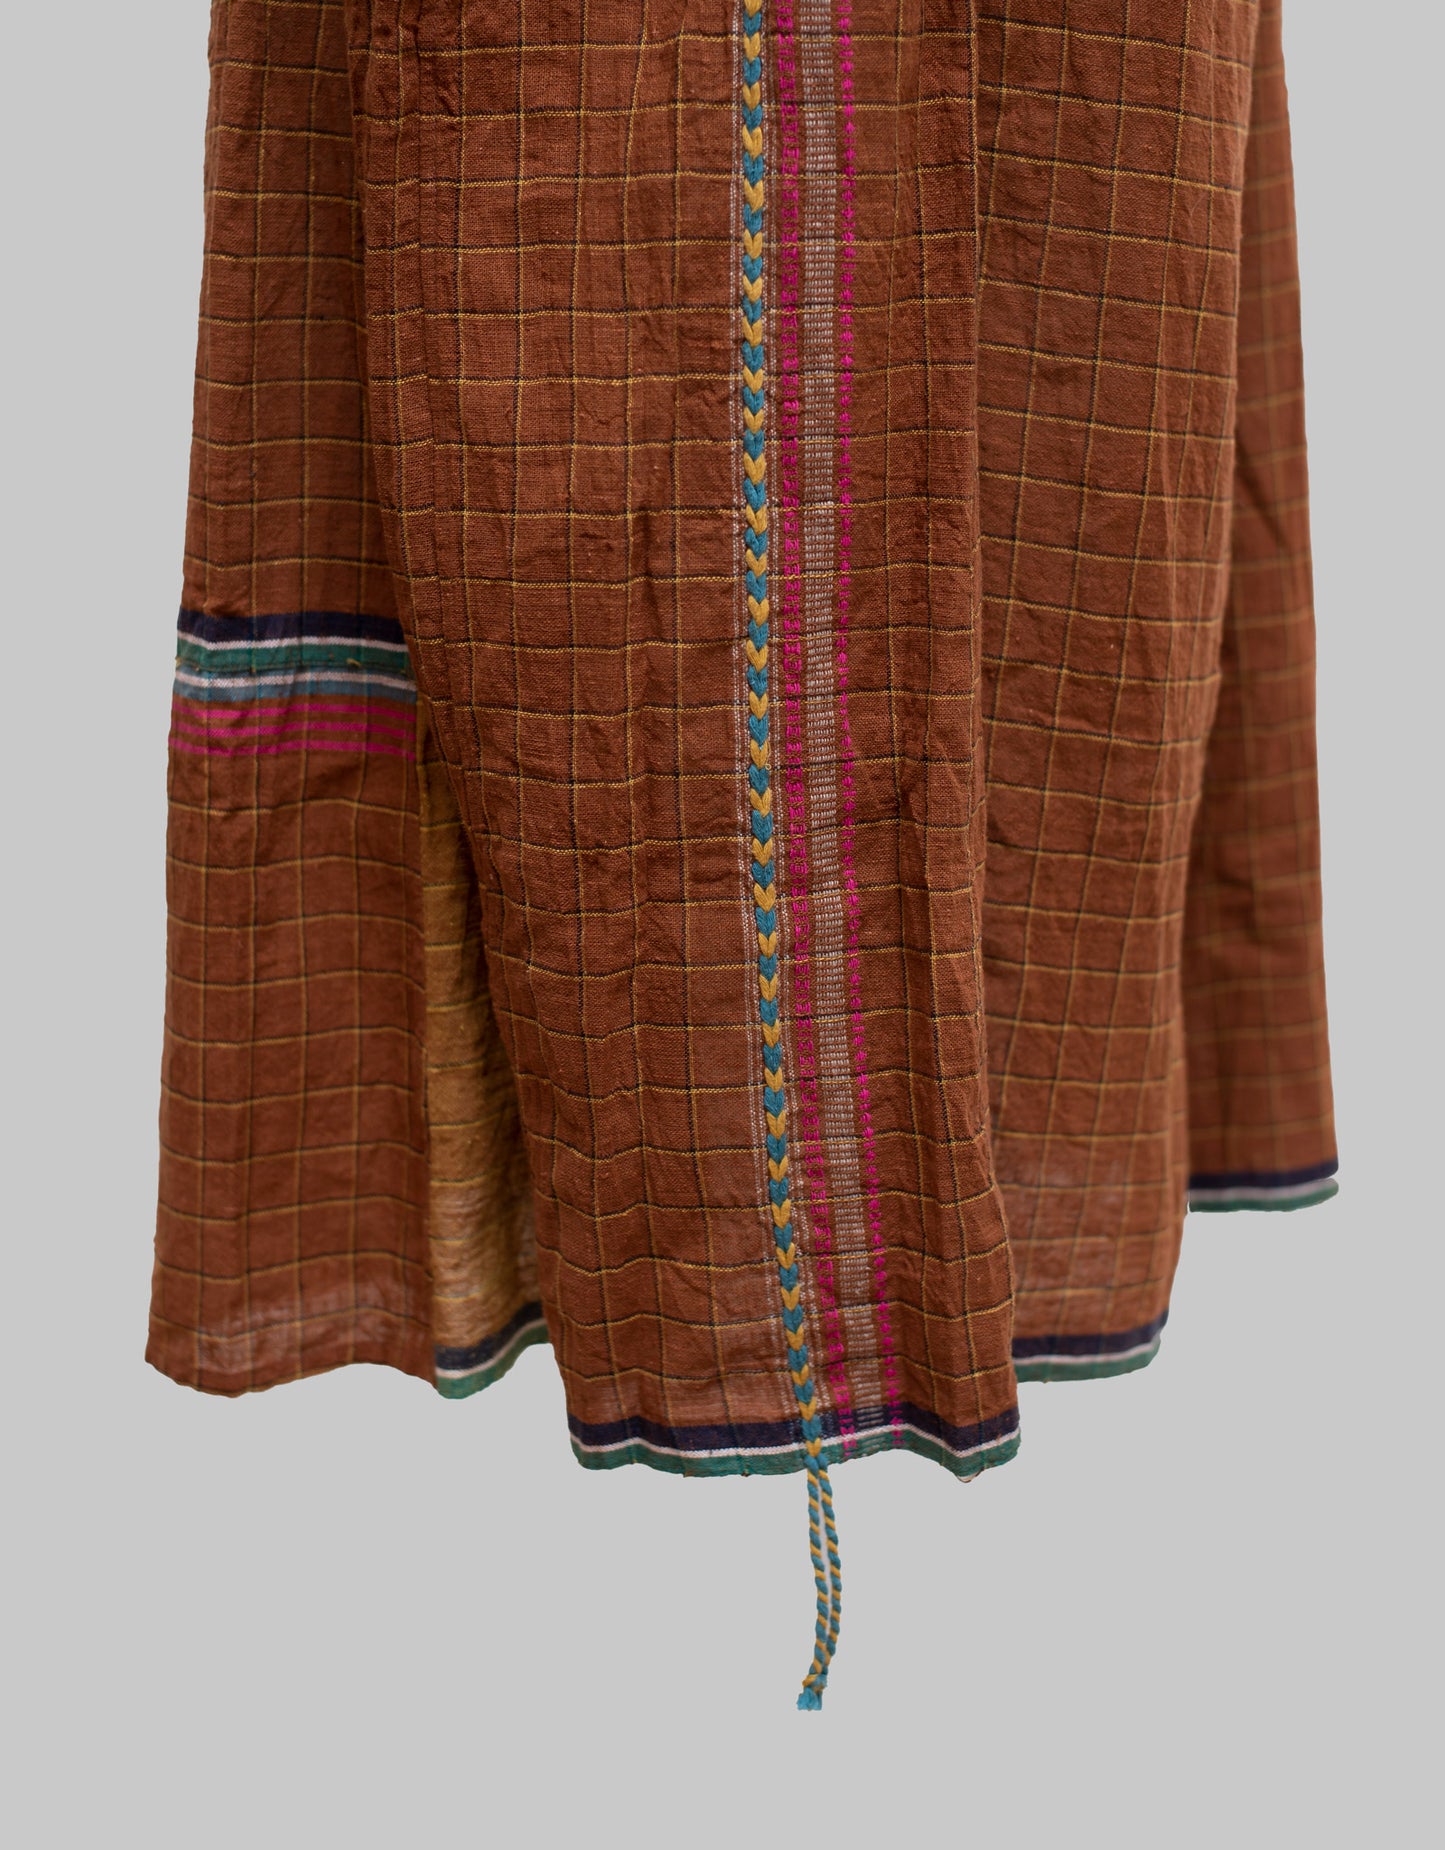 Nilgiri-81 dress